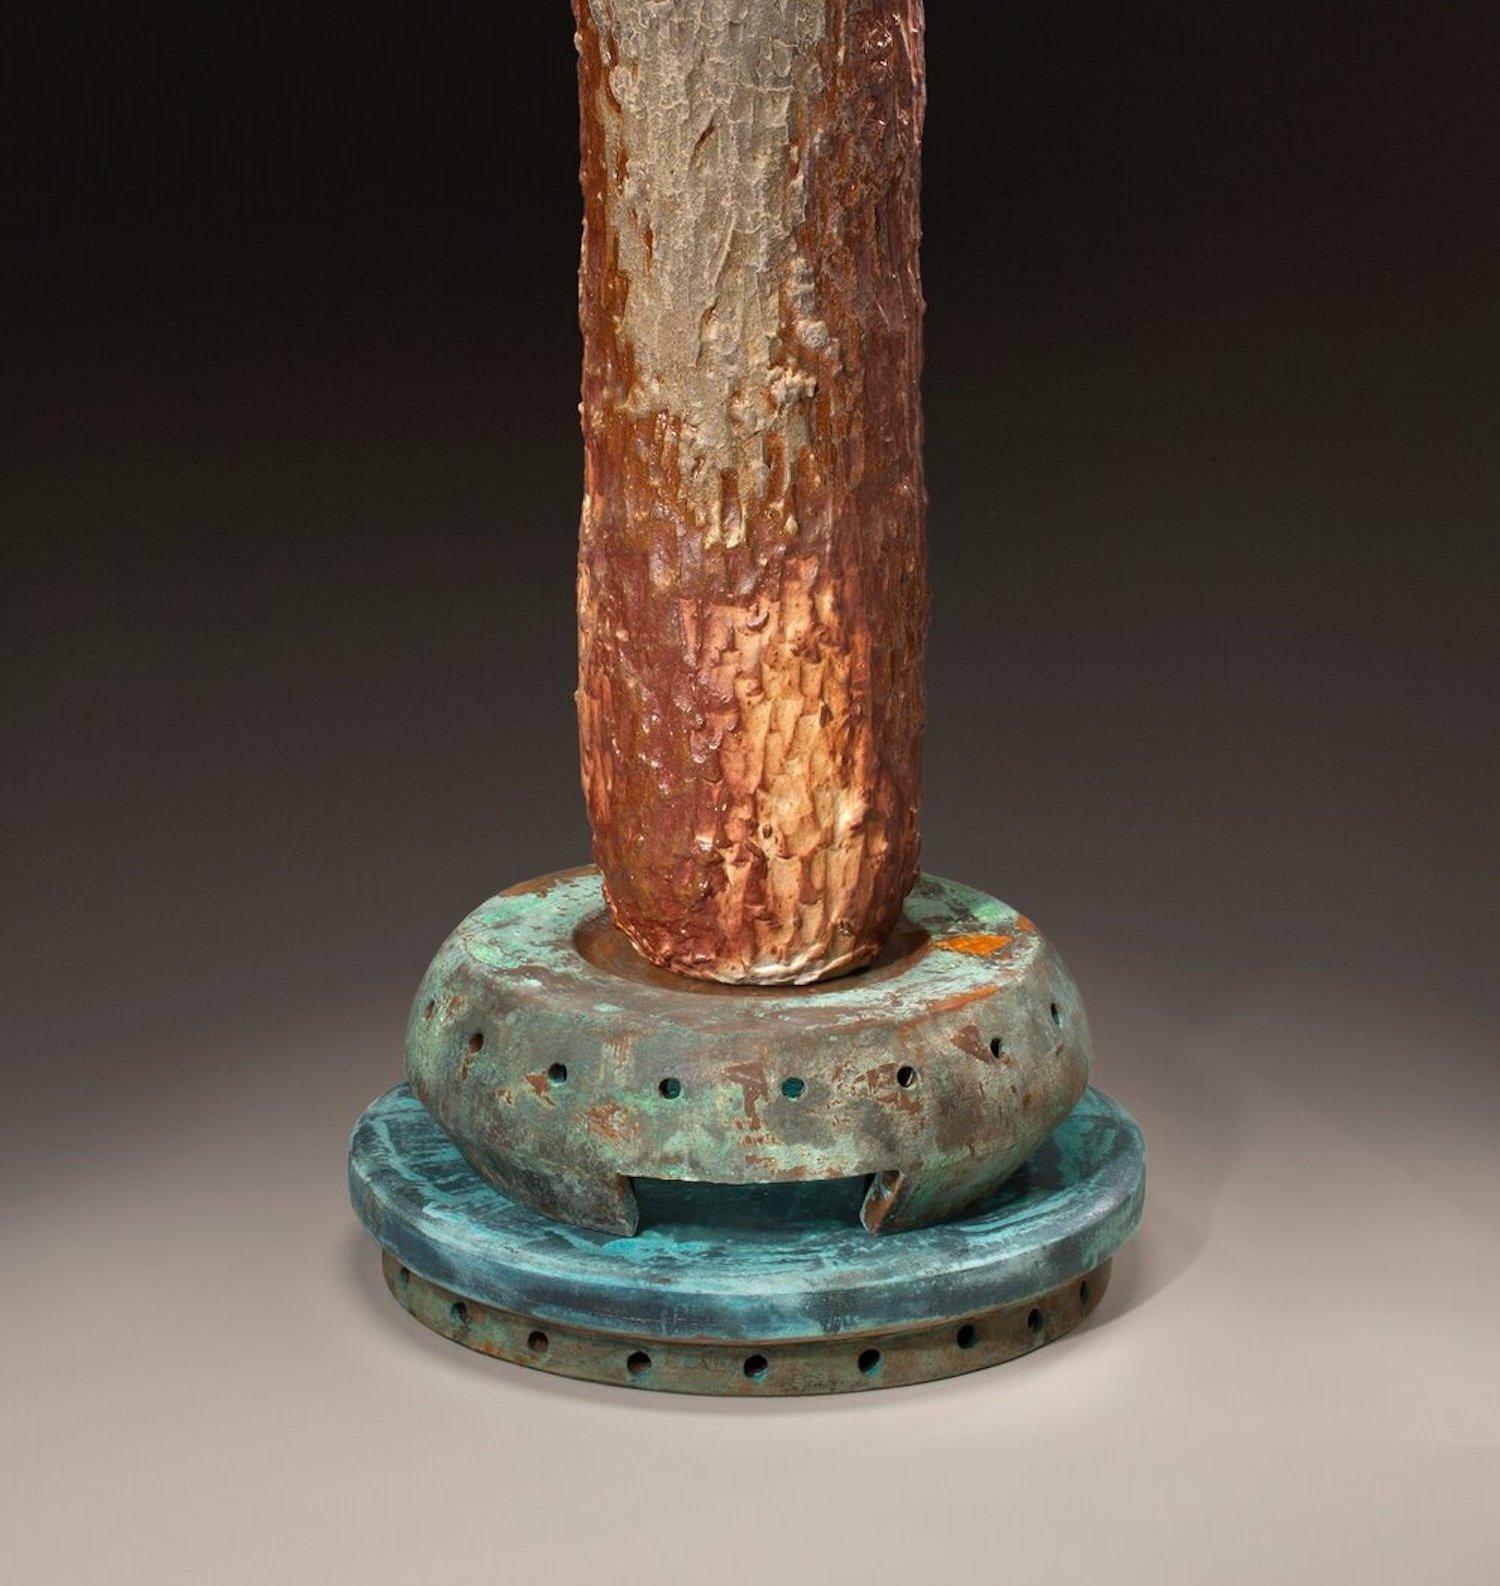 Contemporary Richard Hirsch Glazed Ceramic Crucible Sculpture, 2018 For Sale